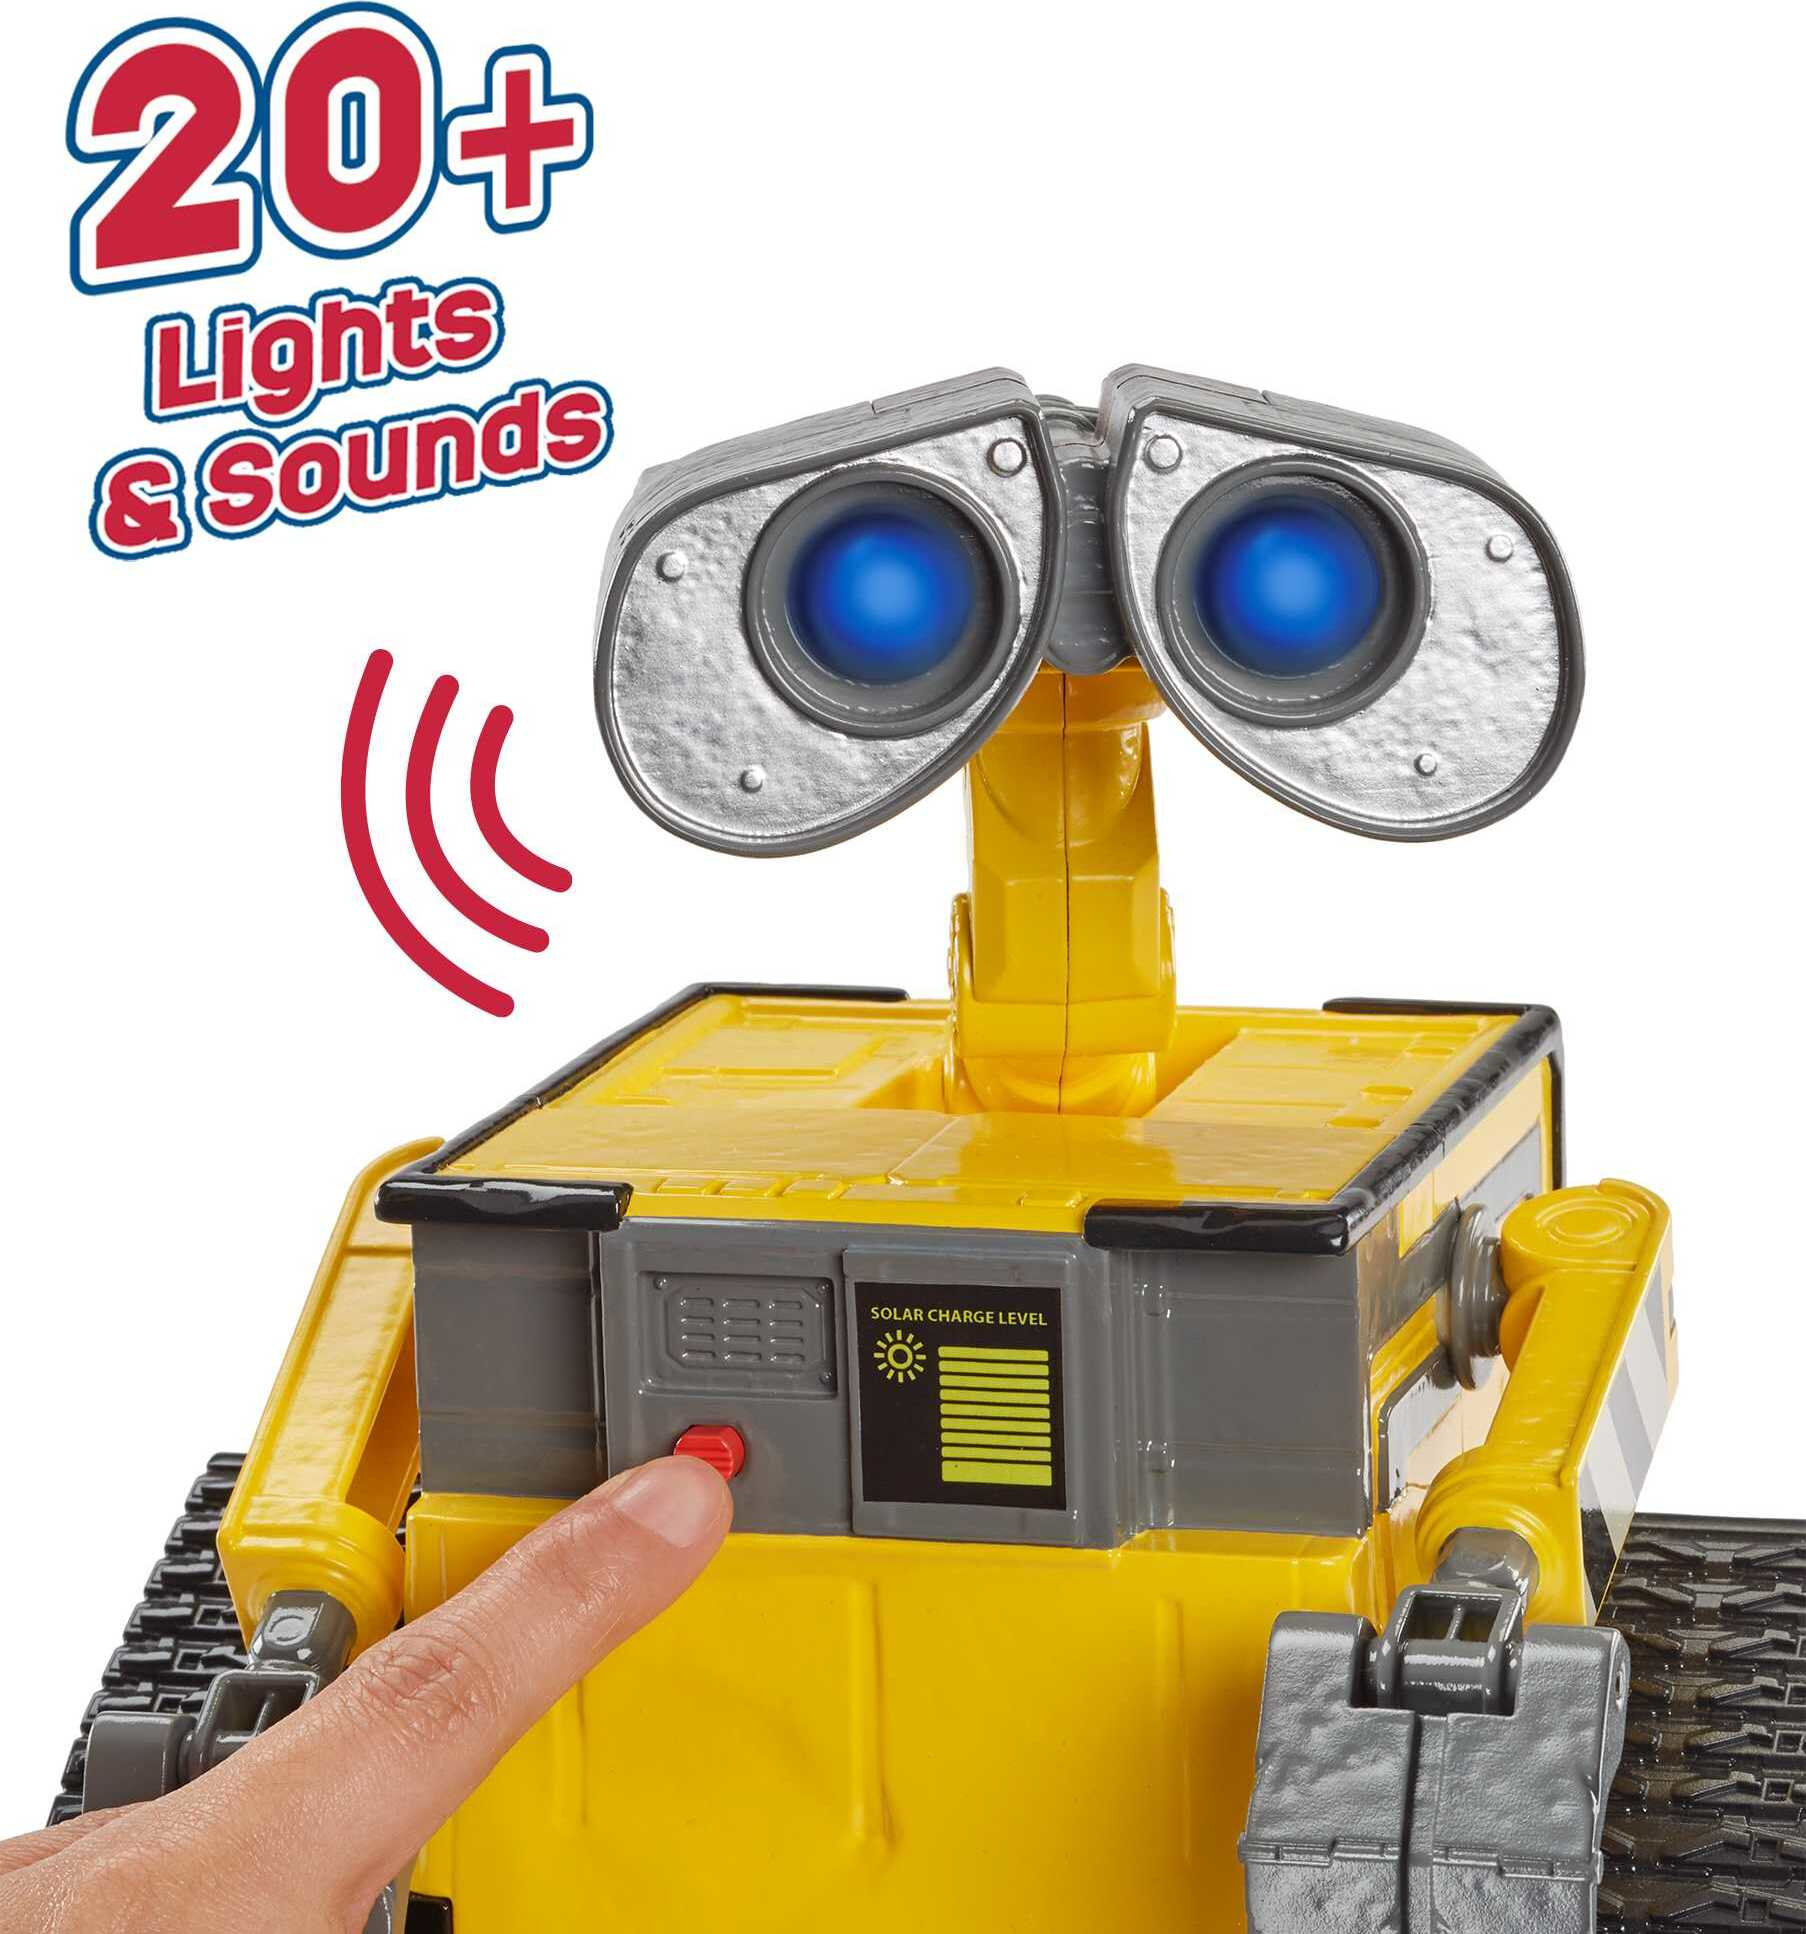 Disney and Pixar WALL-E Robot Toy, Remote Control Hello WALL-E Robot - image 5 of 7